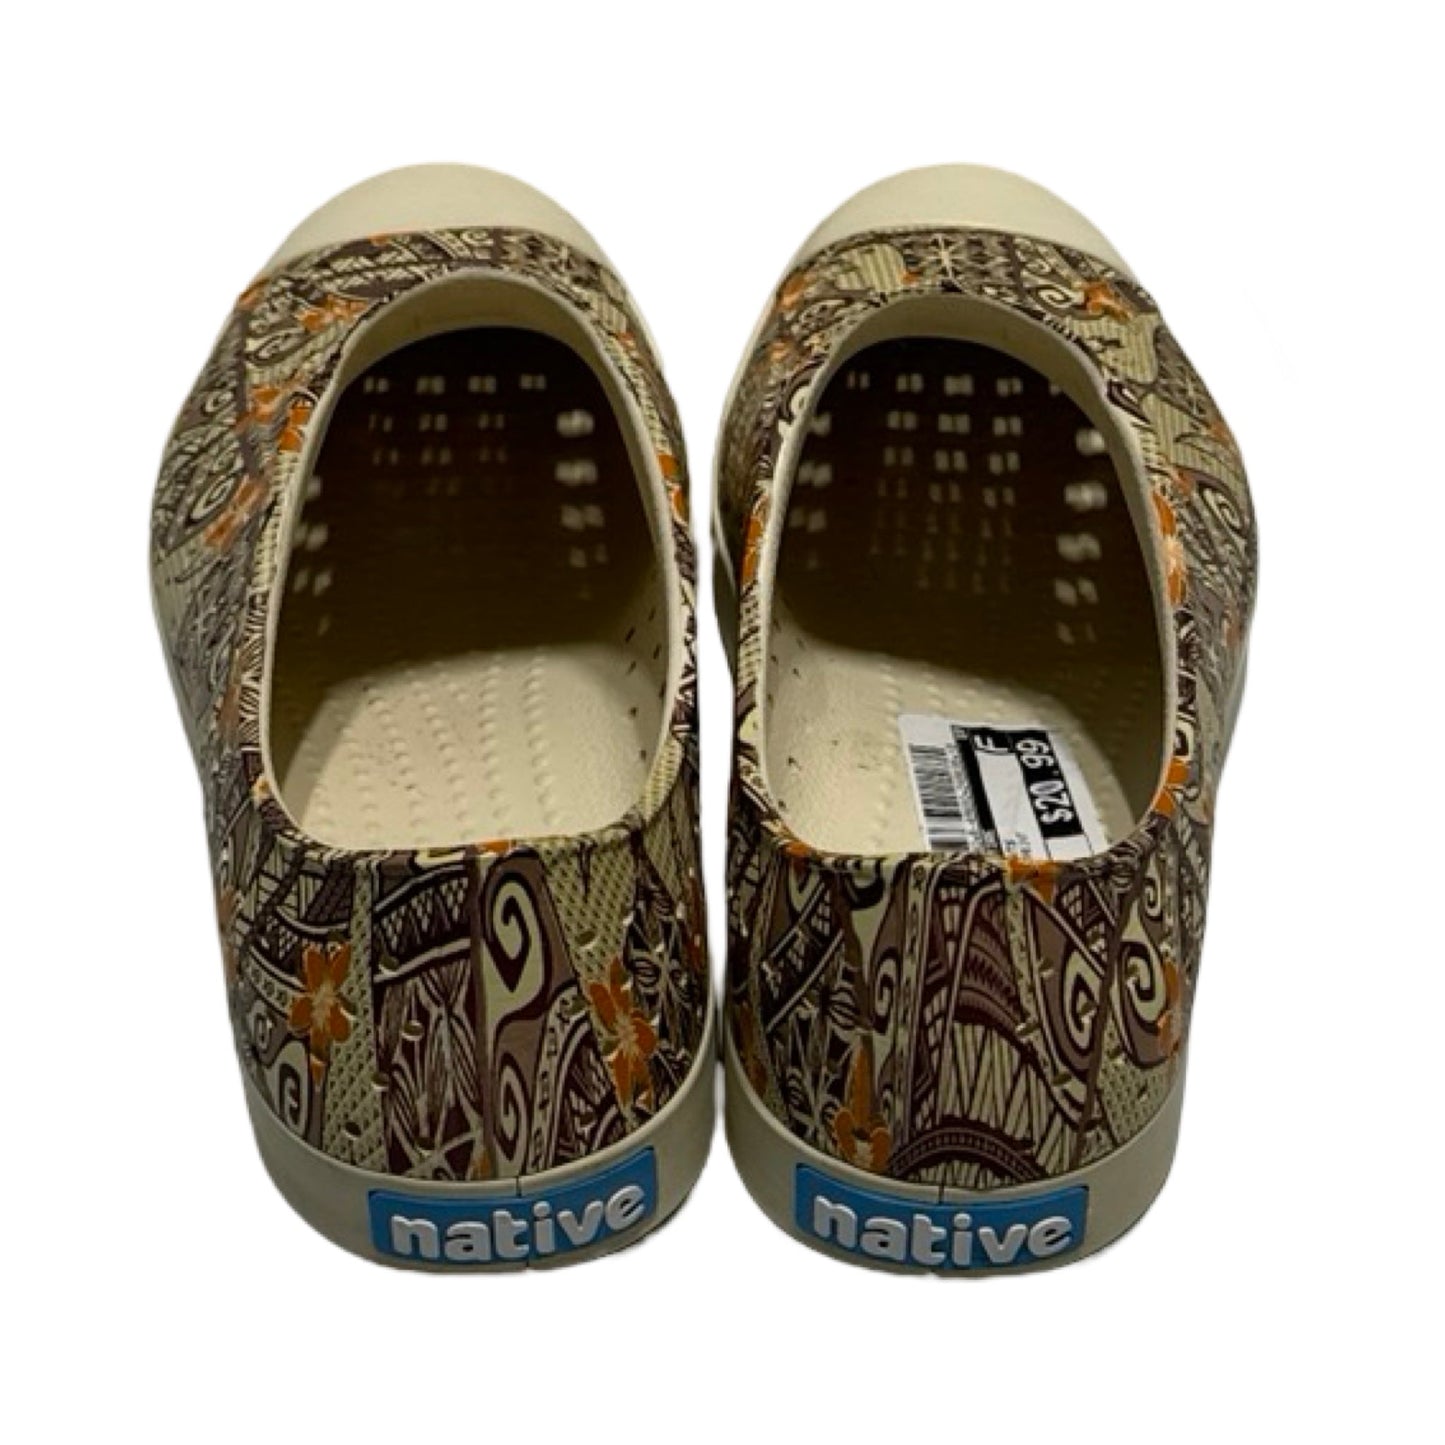 Tropical Print Shoes Flats Disney Store, Size 11